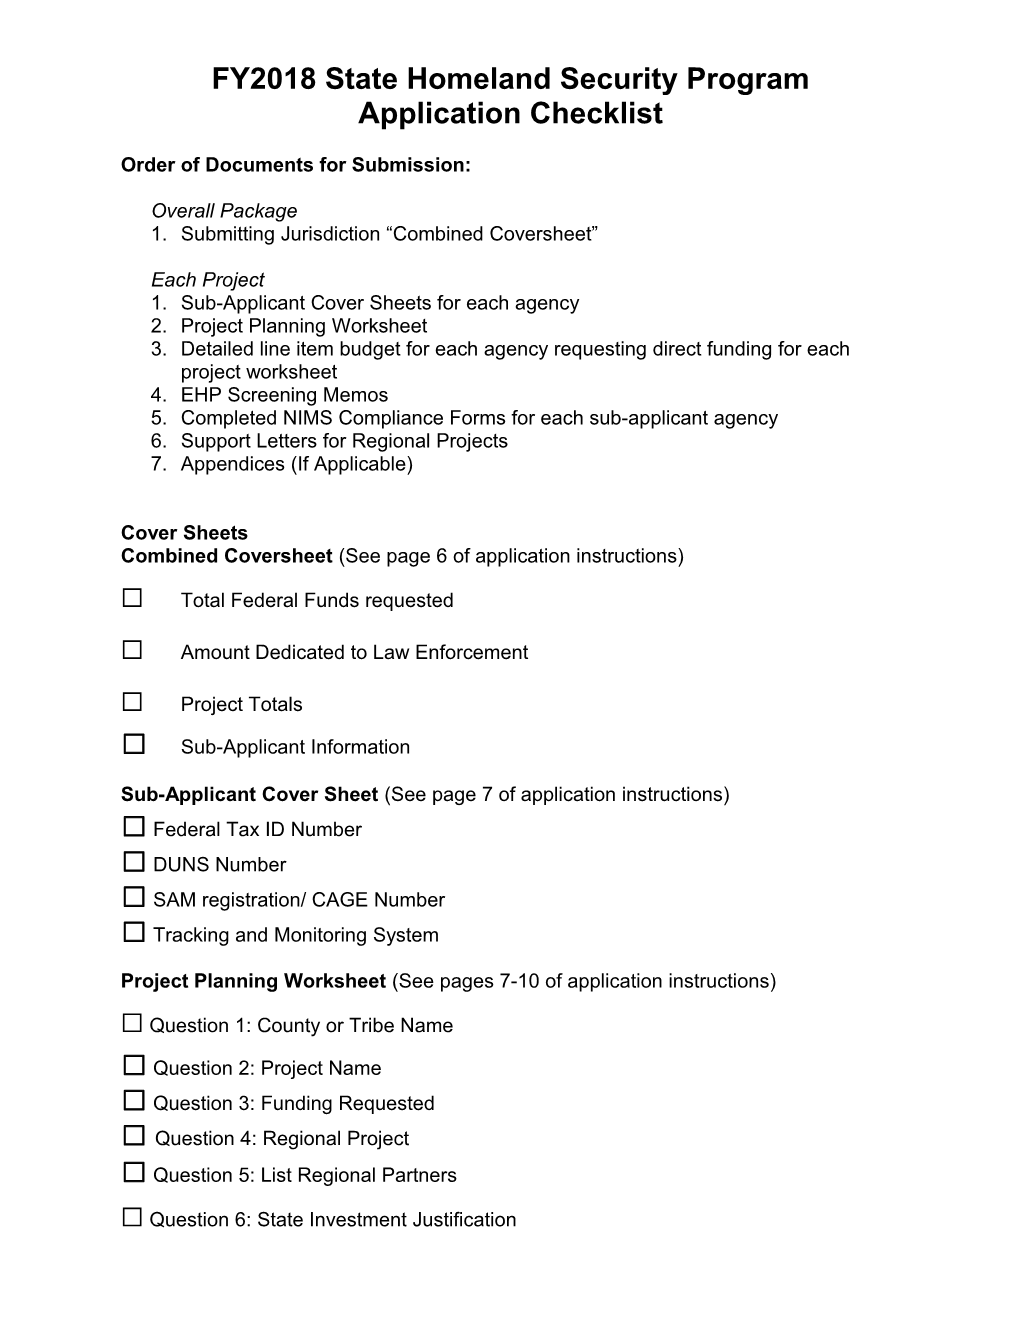 FY2018 SHSP Application Project Checklist